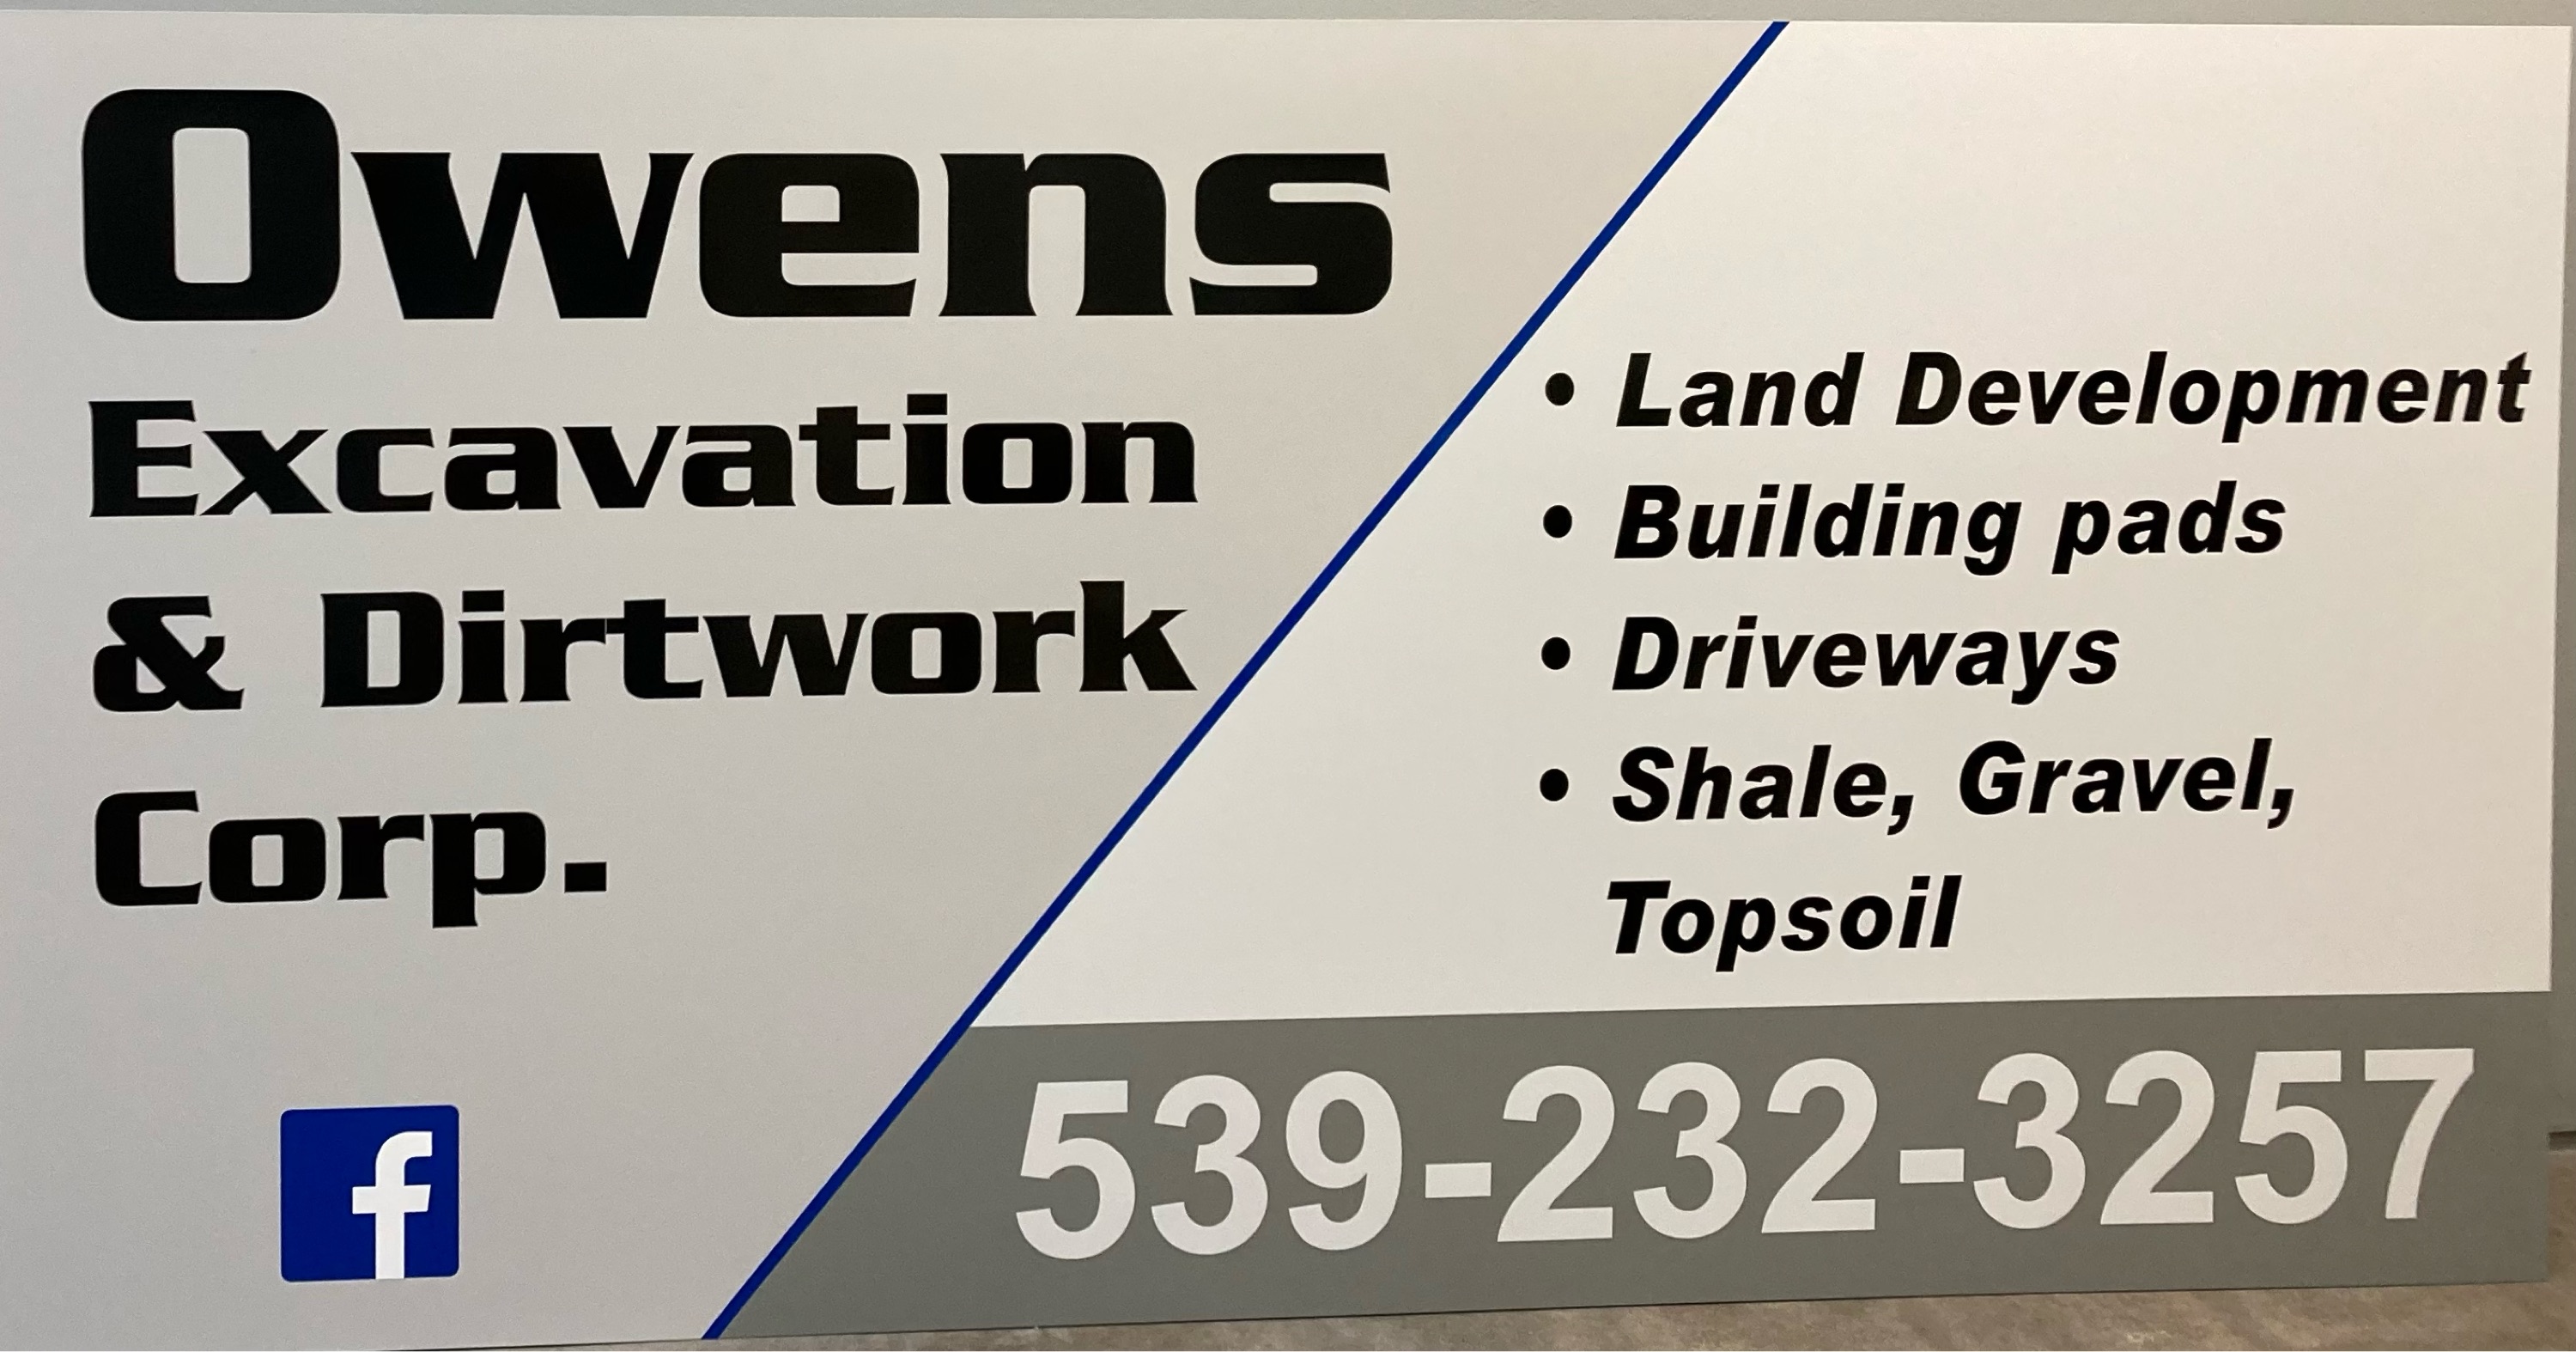 Owens Excavation & Dirtwork Corp Logo